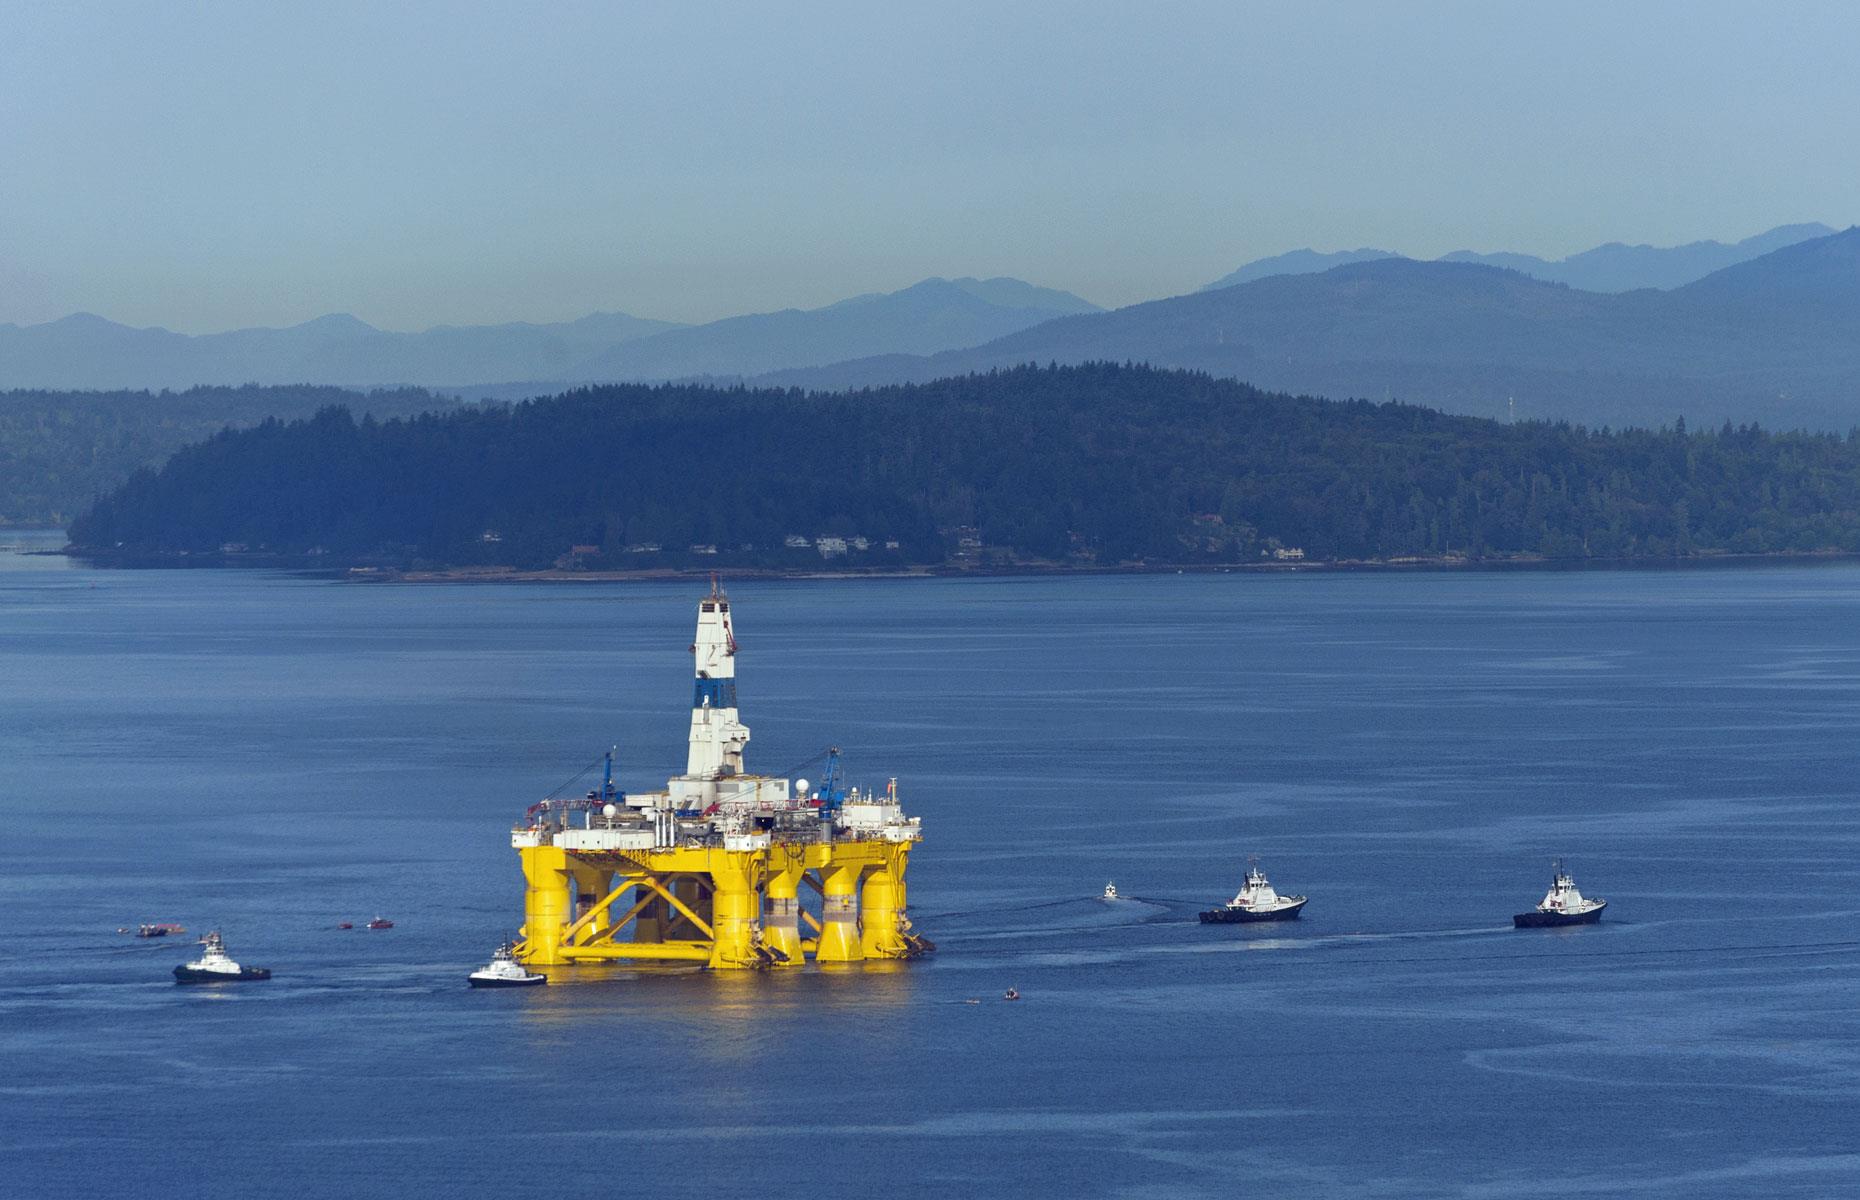 The value of America's oil resources: $21 trillion 